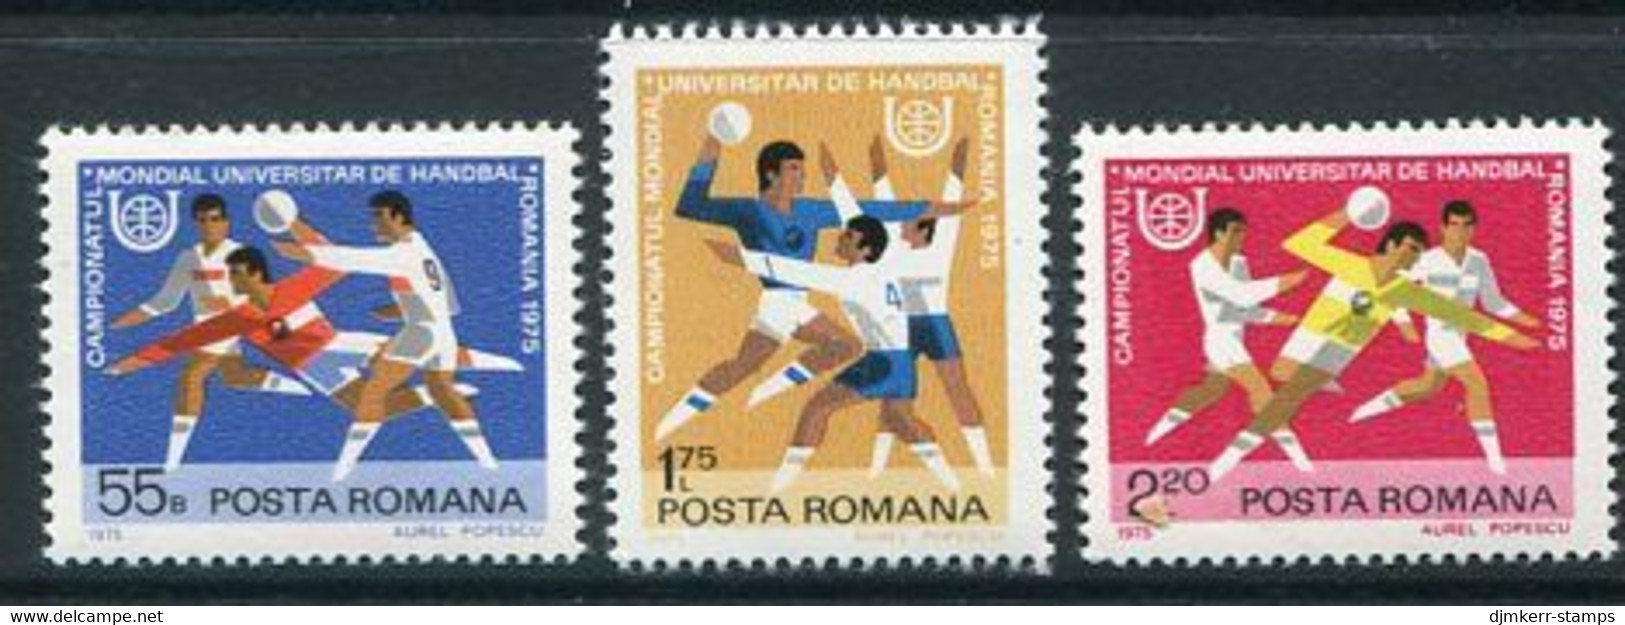 ROMANIA 1975 Student Handball Championship MNH  / **.  Michel 3244-49 - Unused Stamps